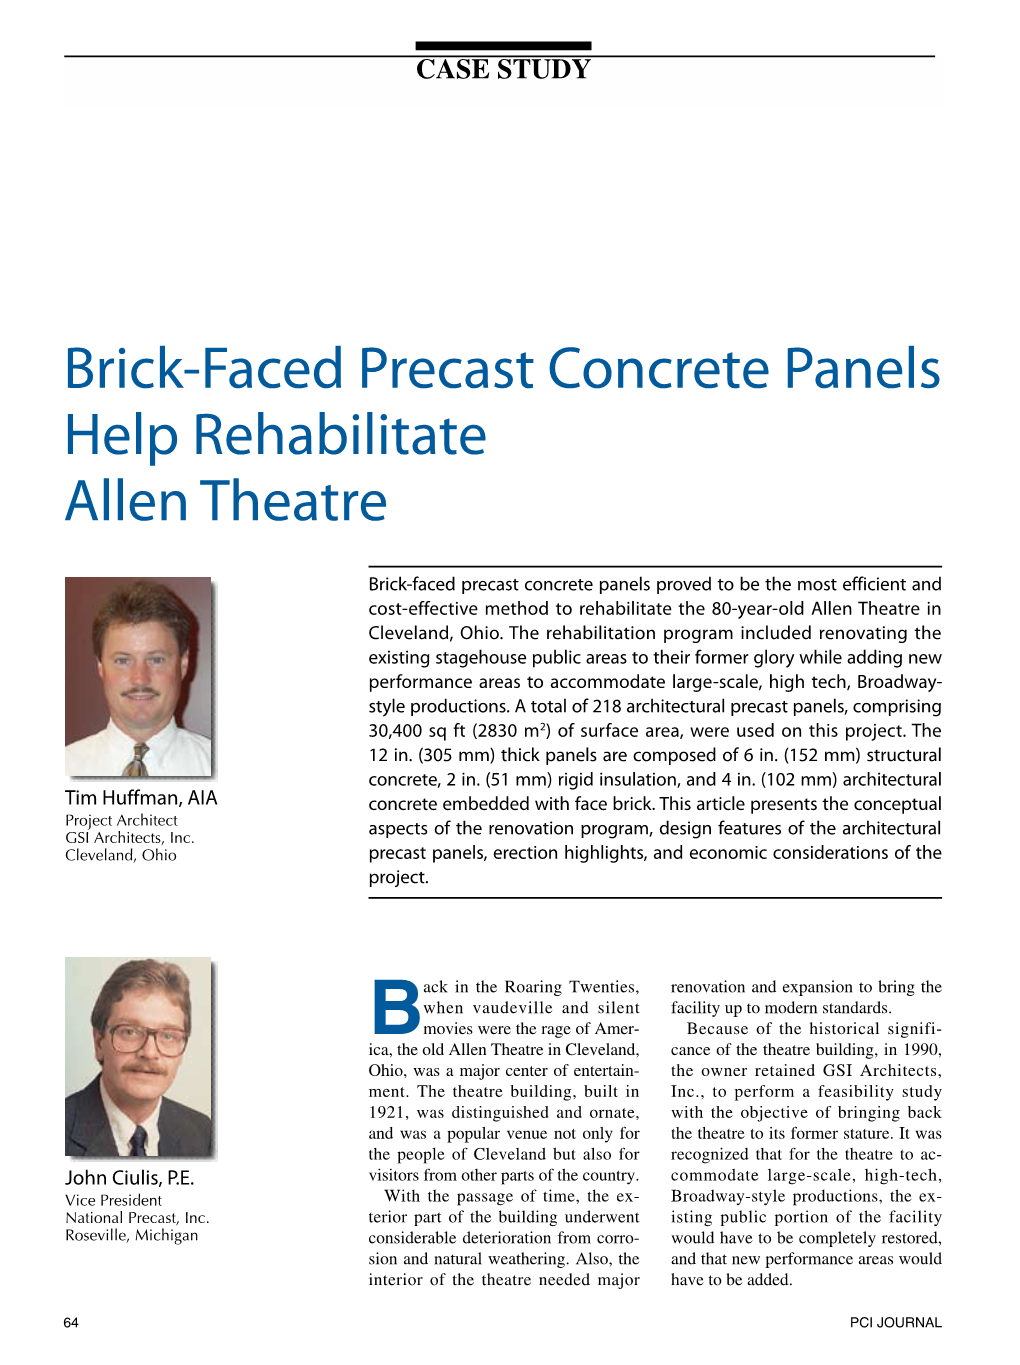 Brick-Faced Precast Concrete Panels Help Rehabilitate Allen Theatre